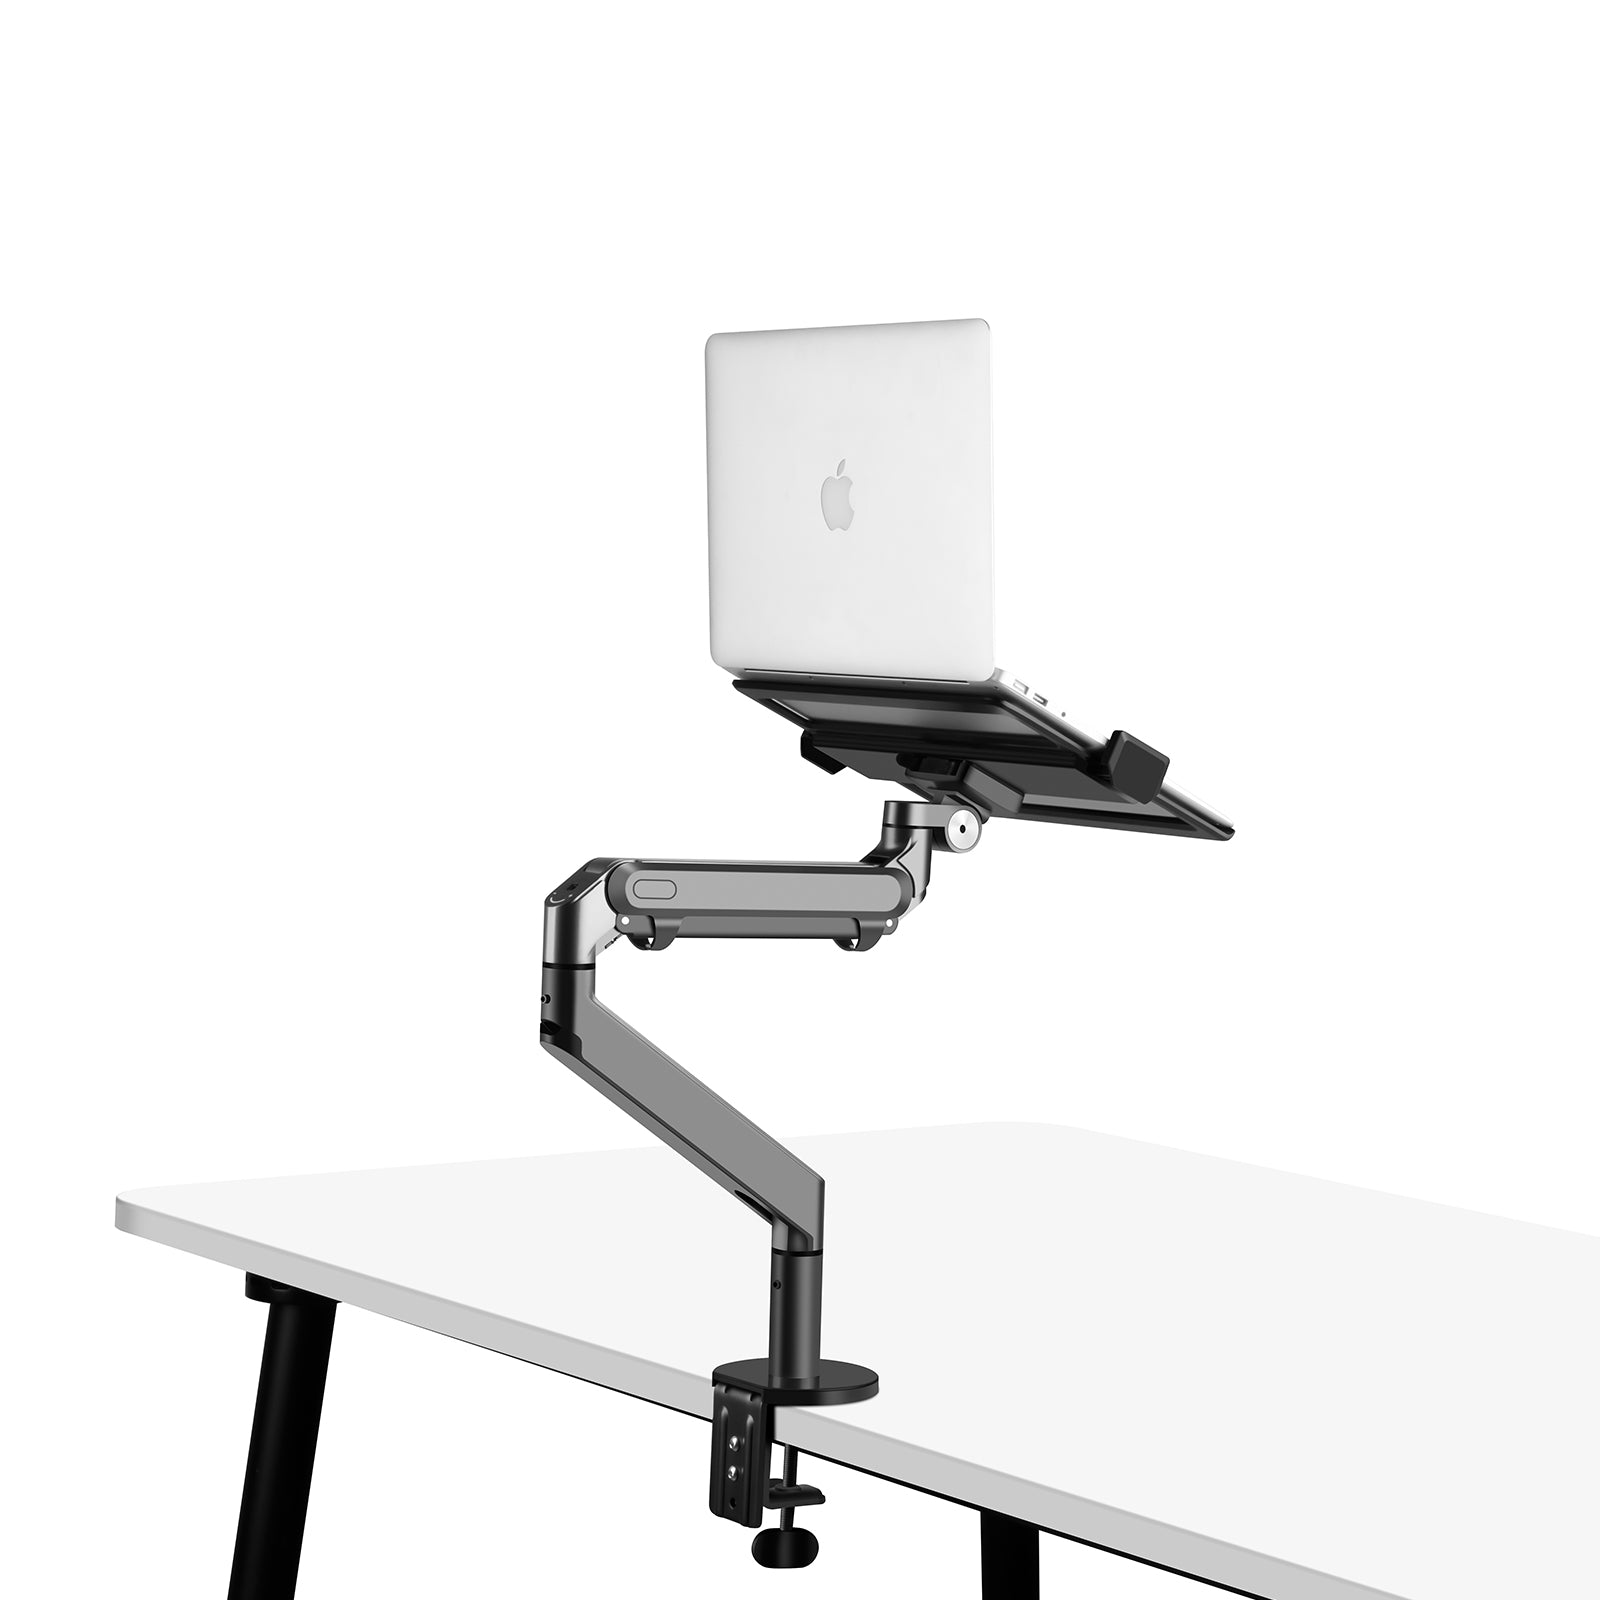 Flex Single Monitor Arm with Laptop Tray- Gas Spring
VORII